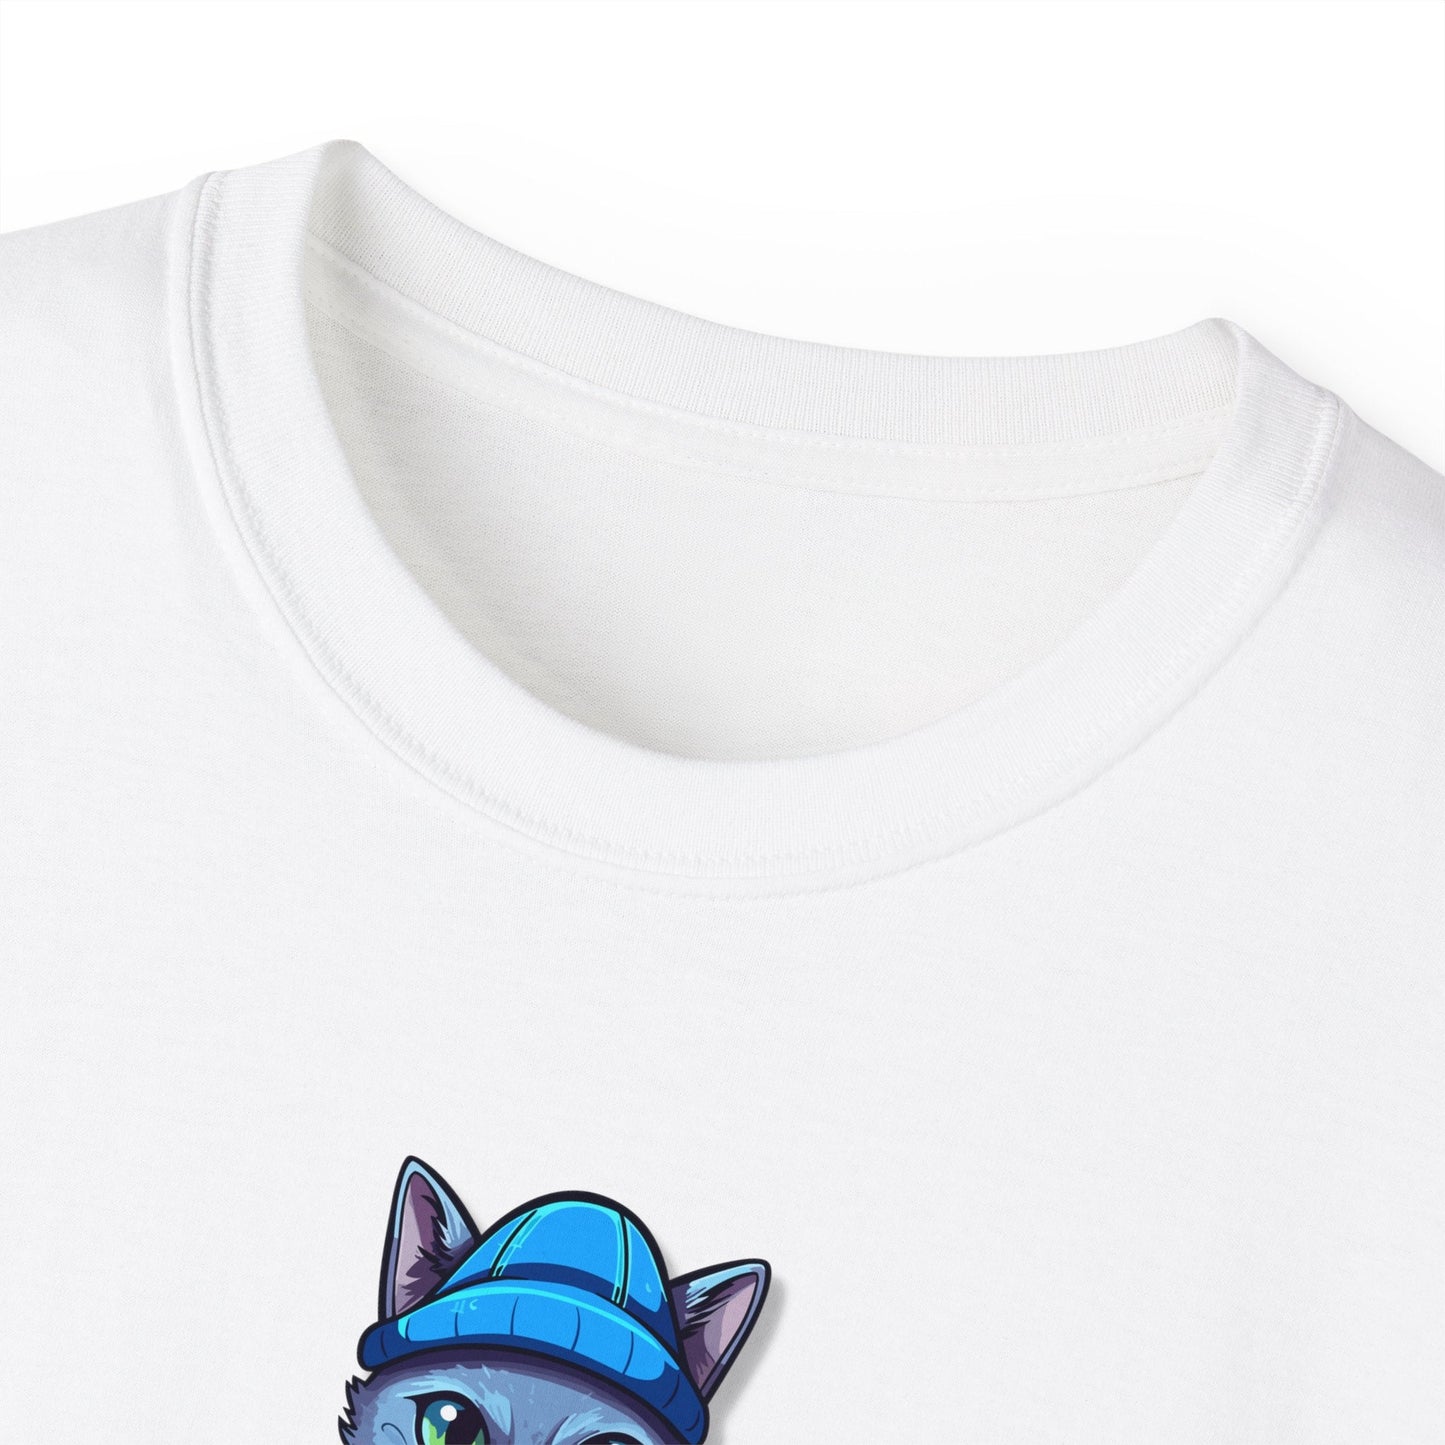 Skate Cat Unisex Ultra Cotton Tee - T - Shirt - Epileptic Al’s Shop